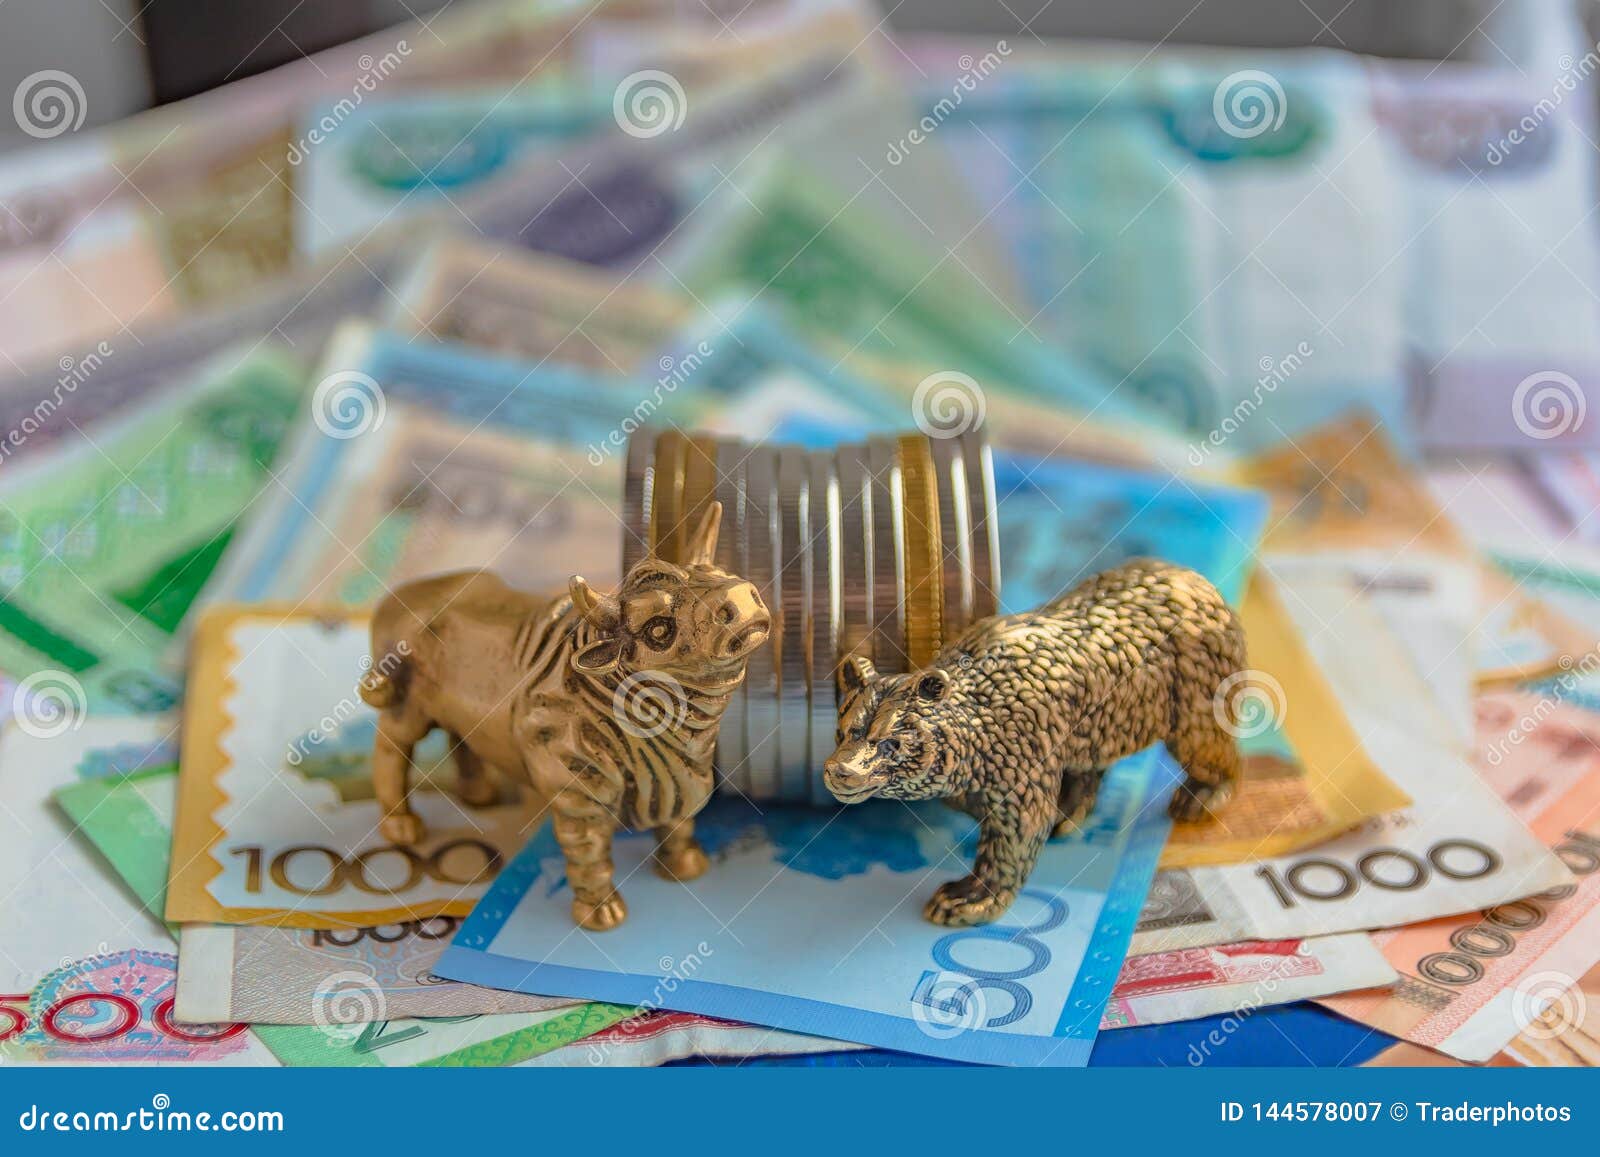 Bull And Bear As Symbols Of Stock Trading. Stock Image ...